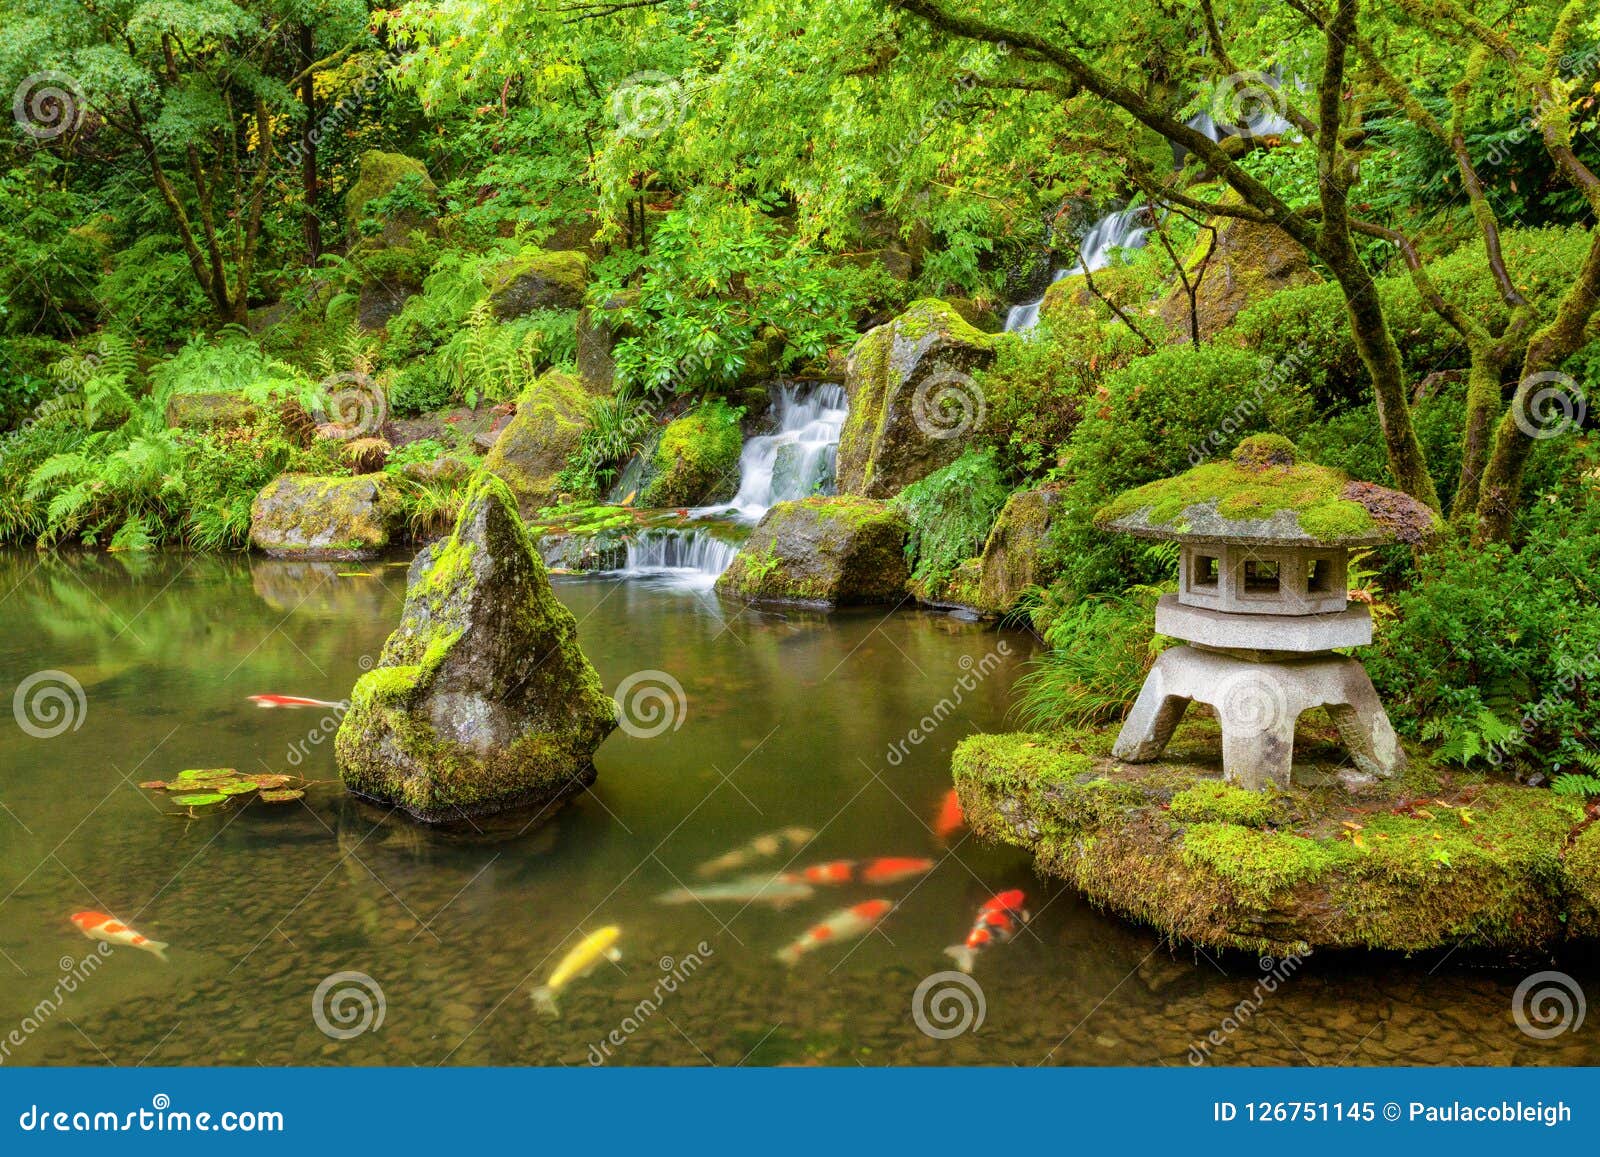 portland japanese garden pond with koi fish